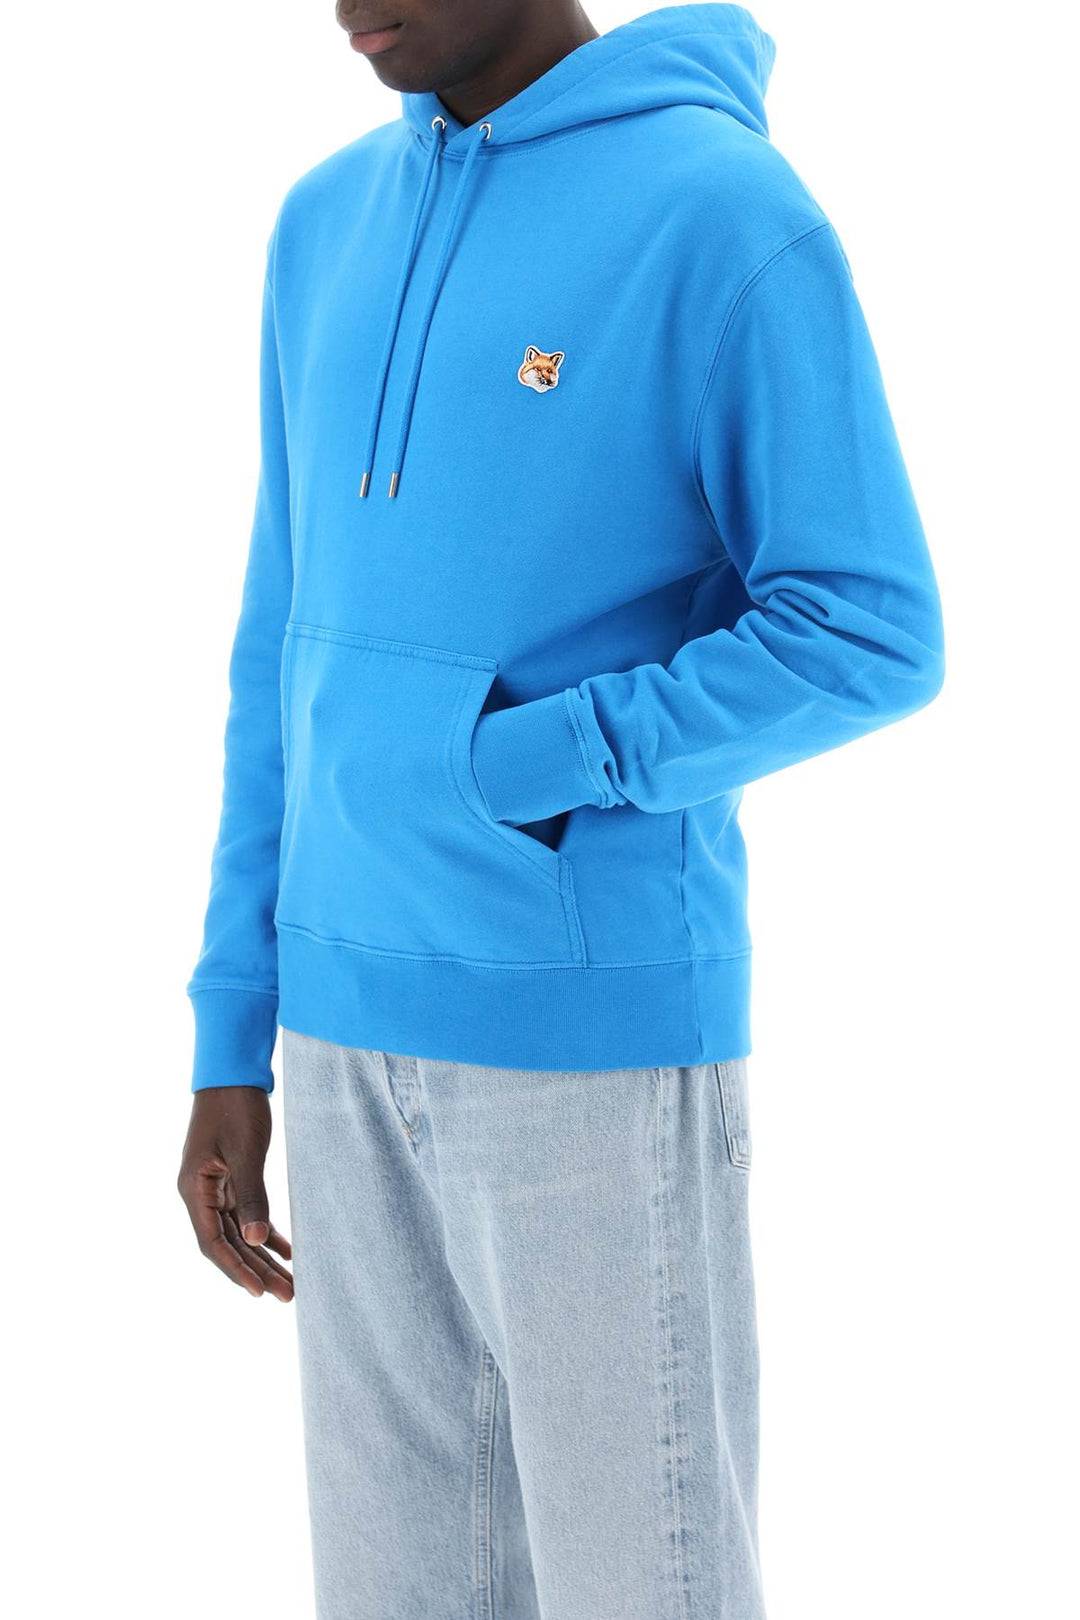 Maison Kitsune Fox Head Hooded Sweatshirt   Blu